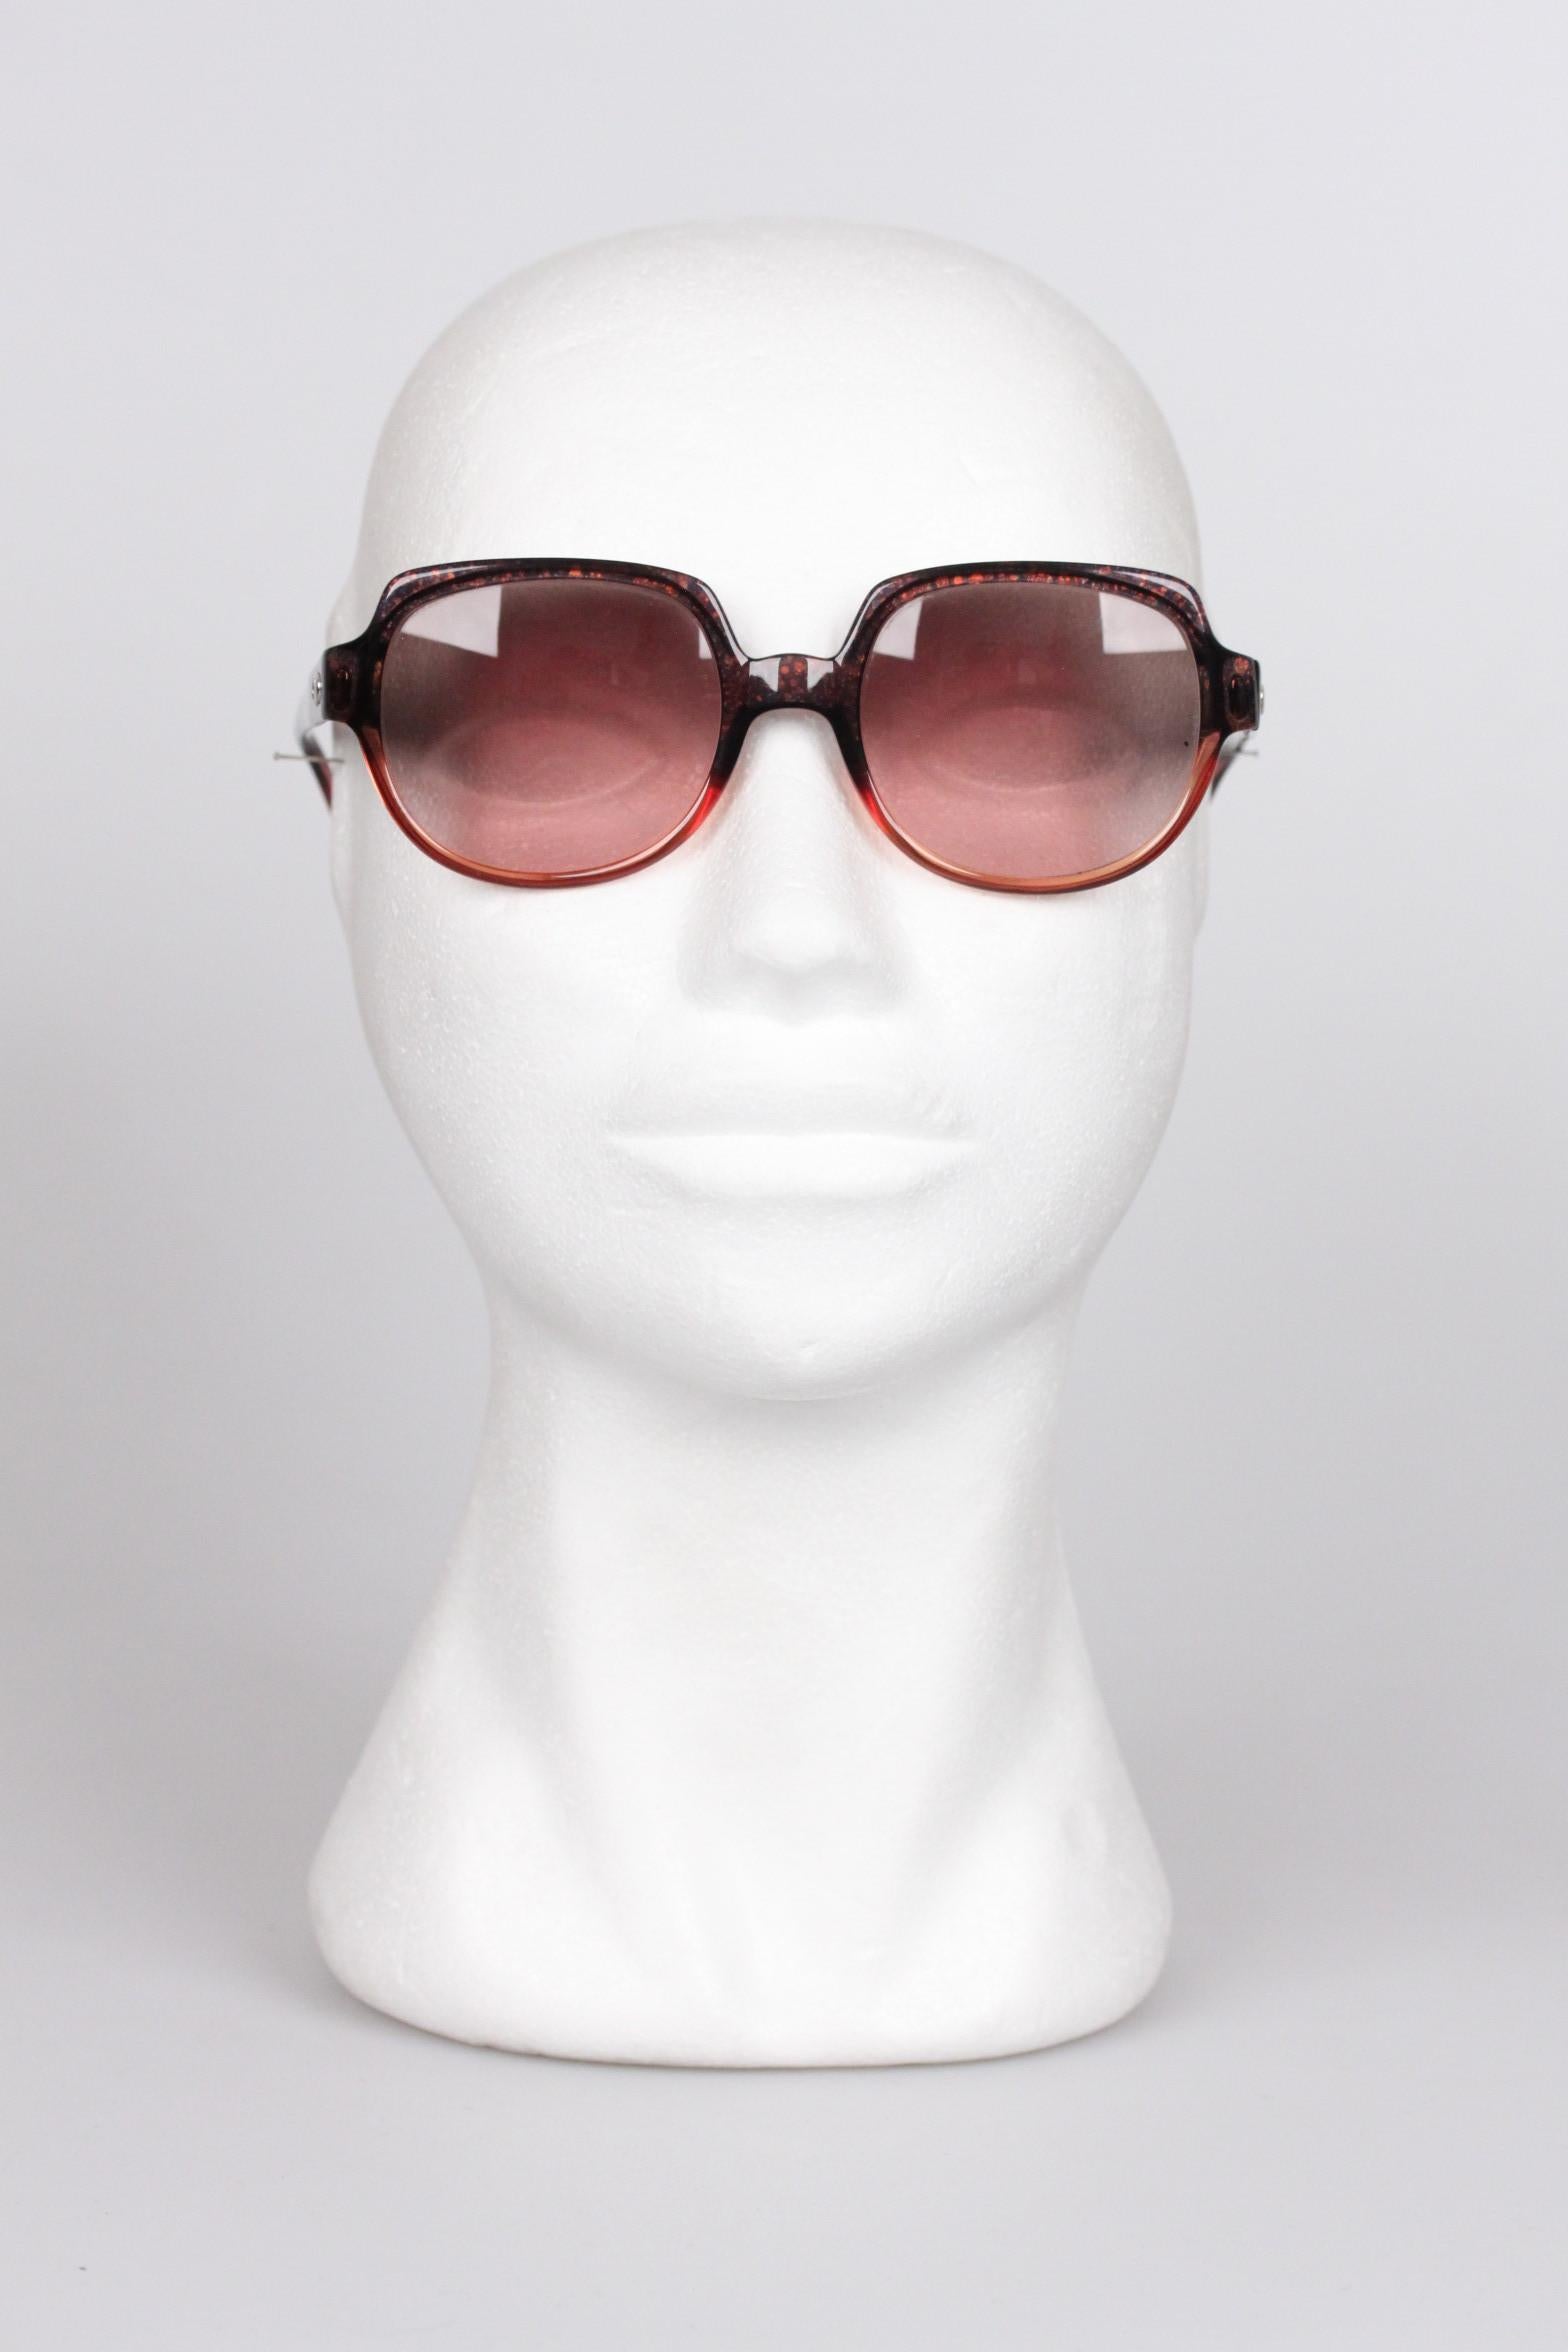 christian dior sunglasses 2020